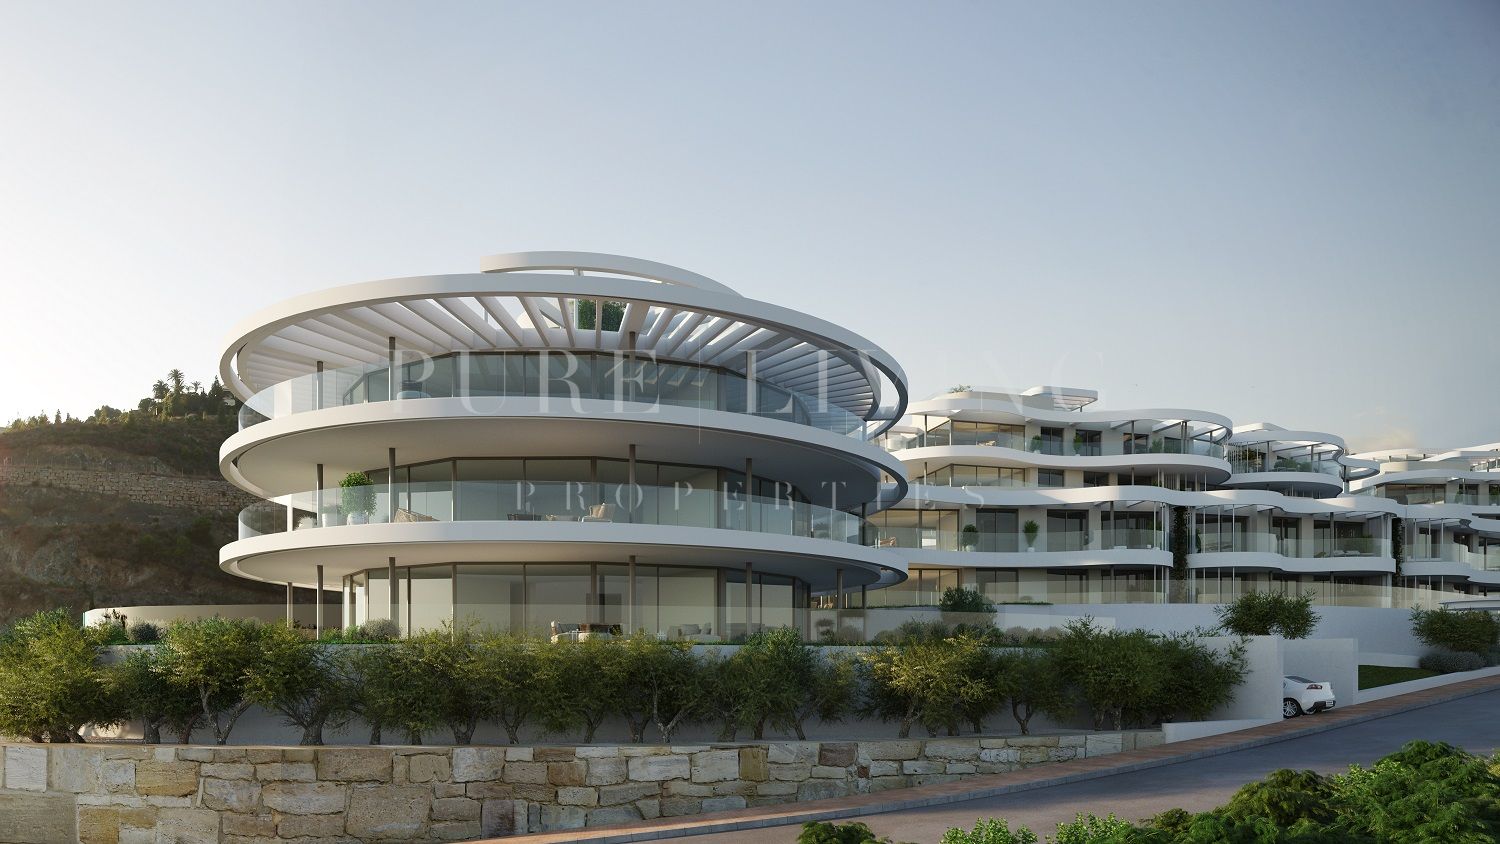 Beautiful new development in Las Colinas de Marbella, Benahavis